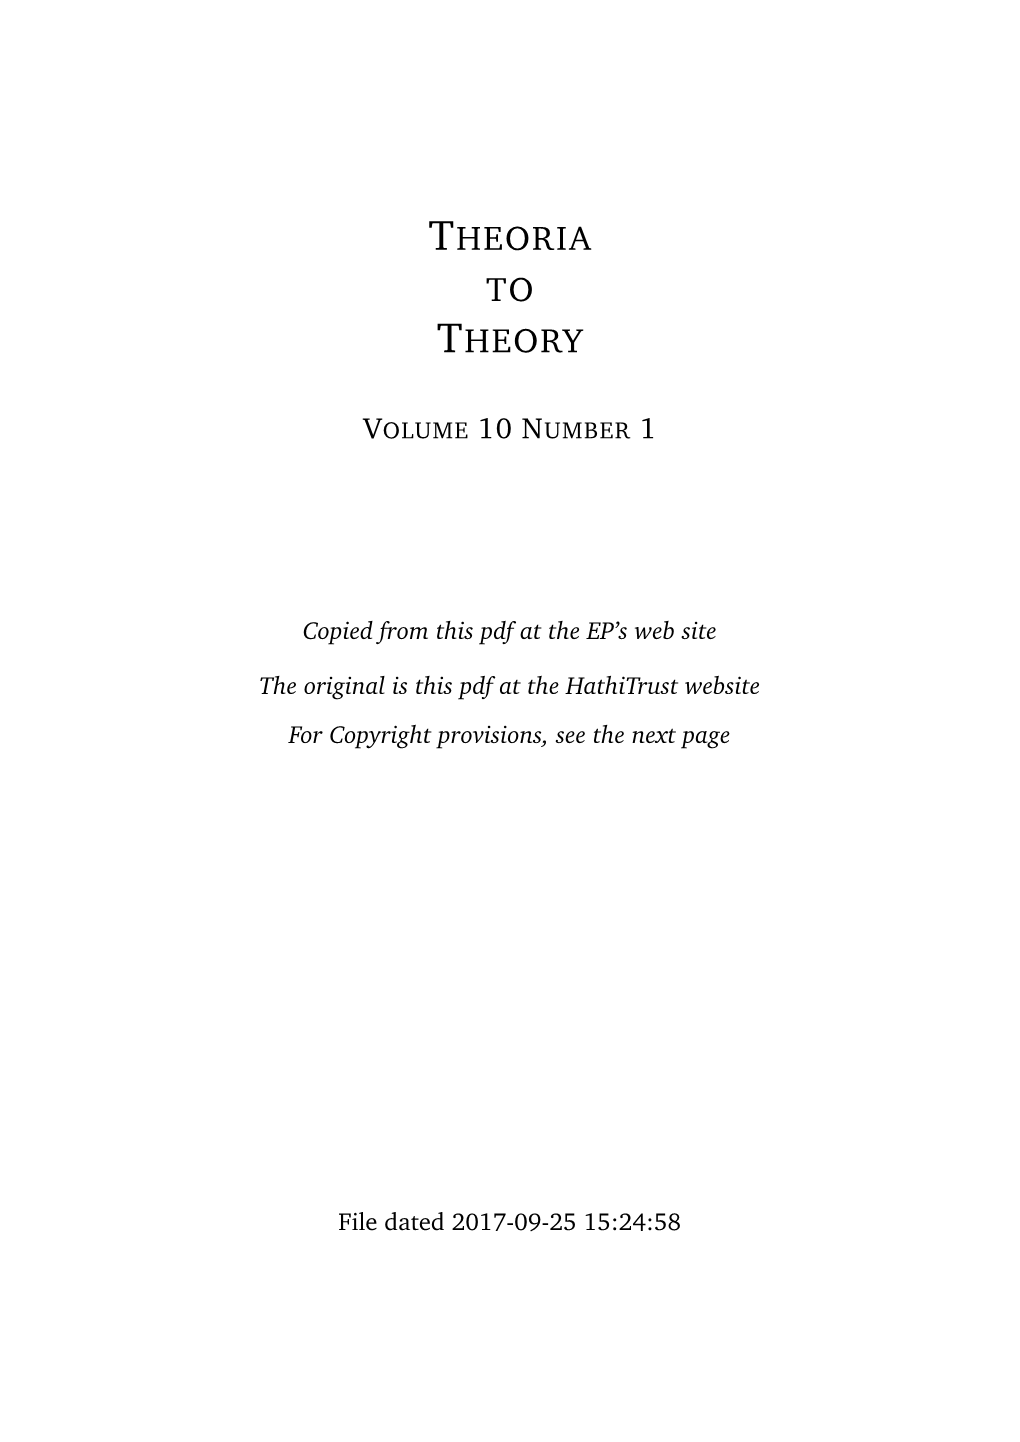 Theoria to Theory